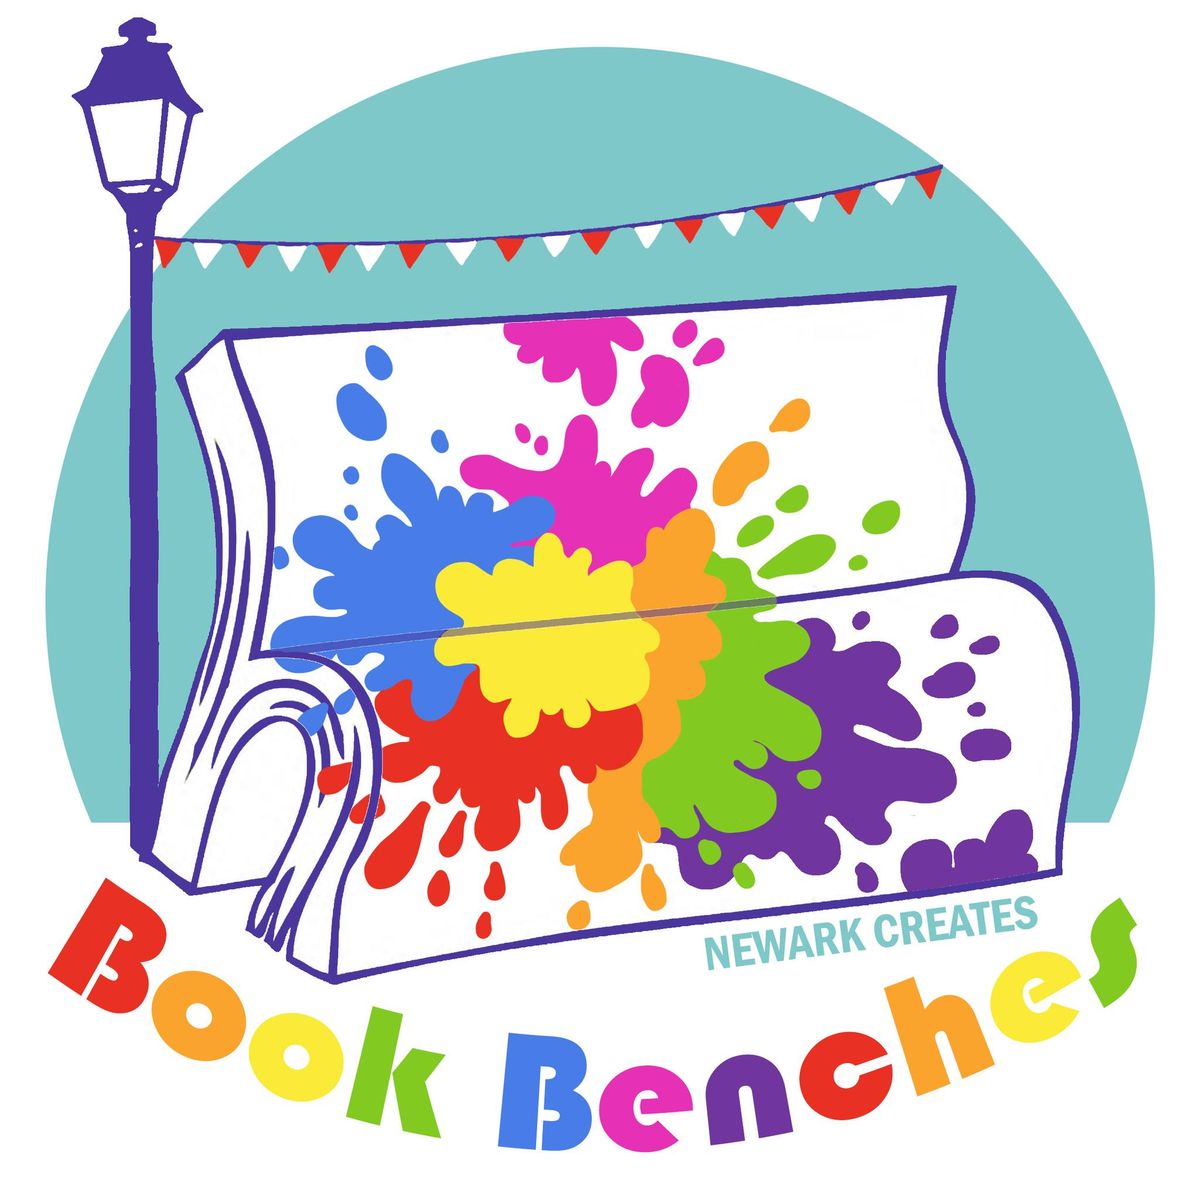 Newark Creates Bookbench Trail!